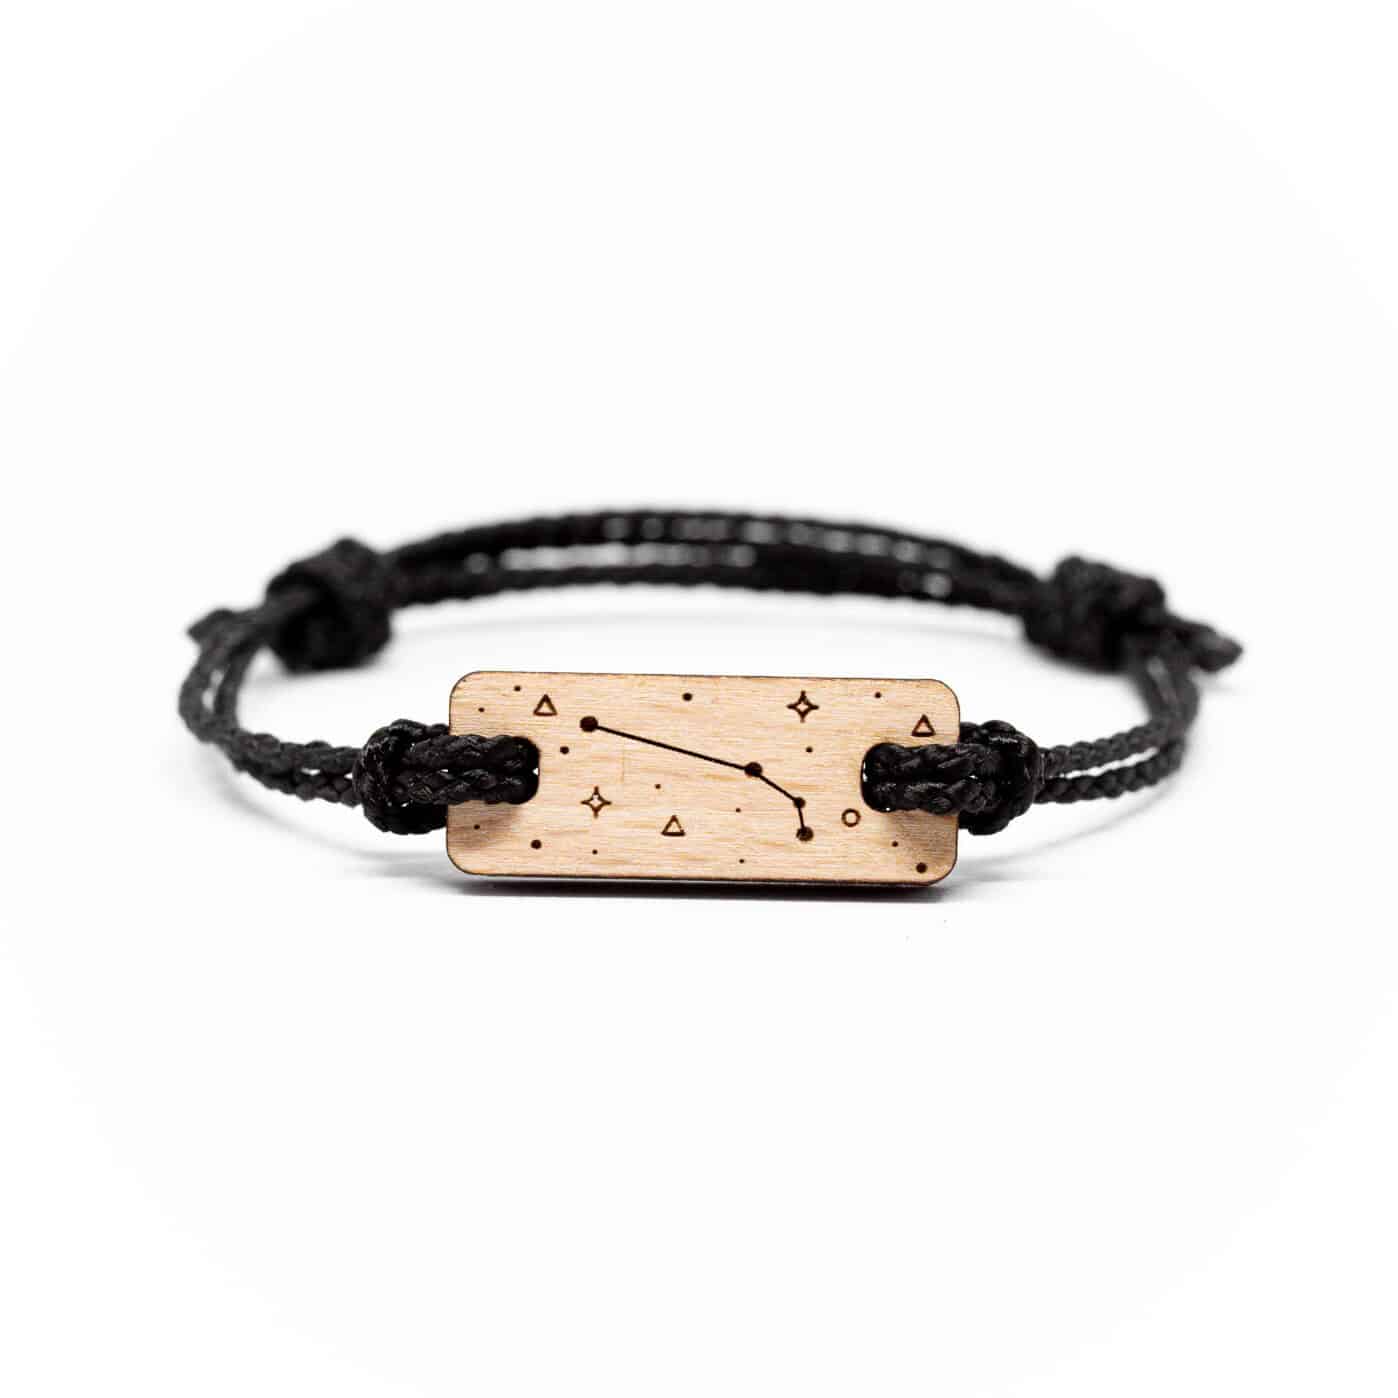 Aries zodiac sign wooden bracelet